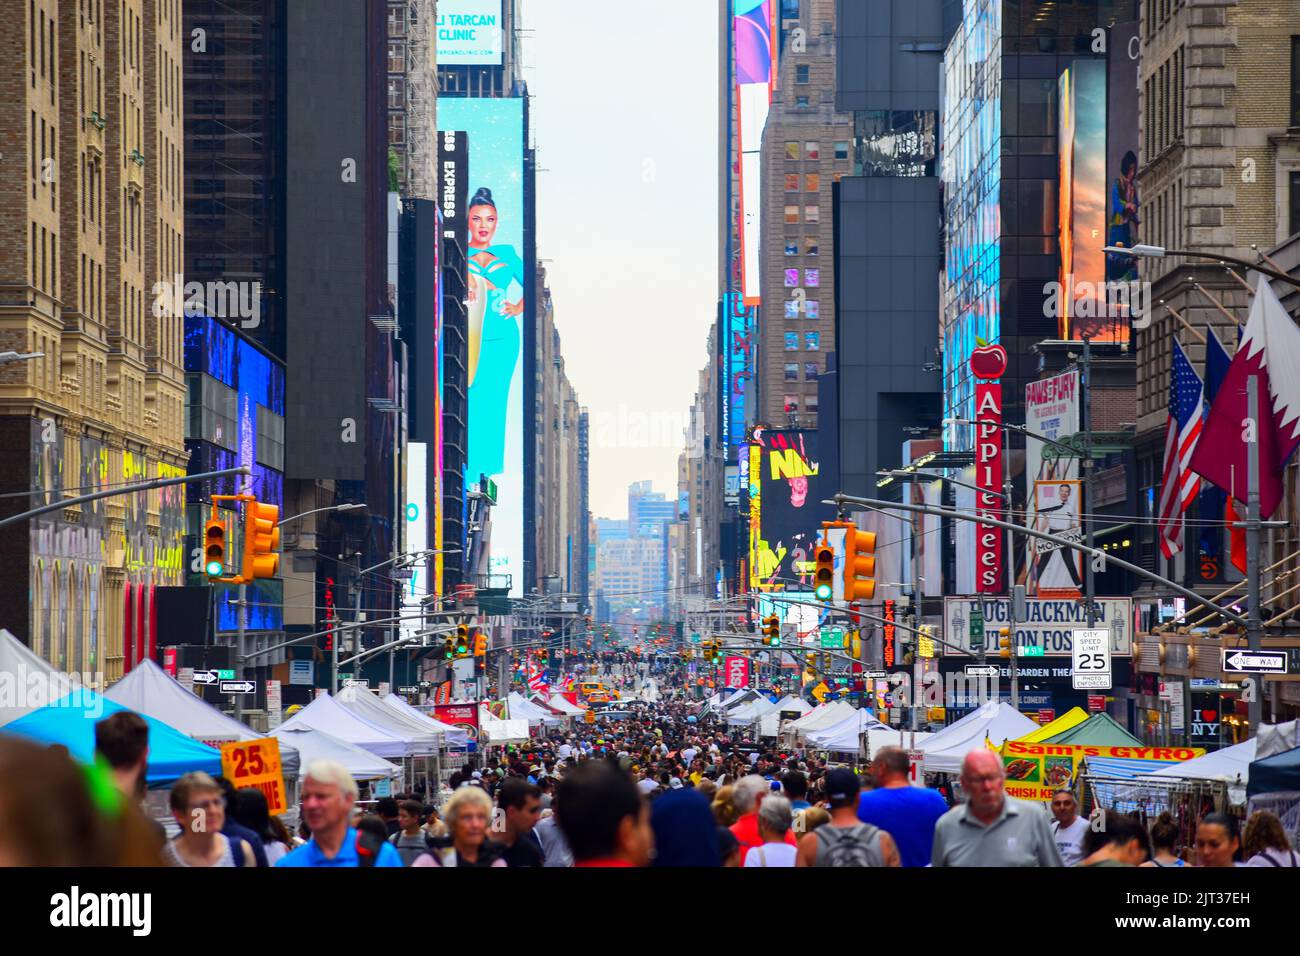 Flea market took over Times Square, New York City. Stock Photo